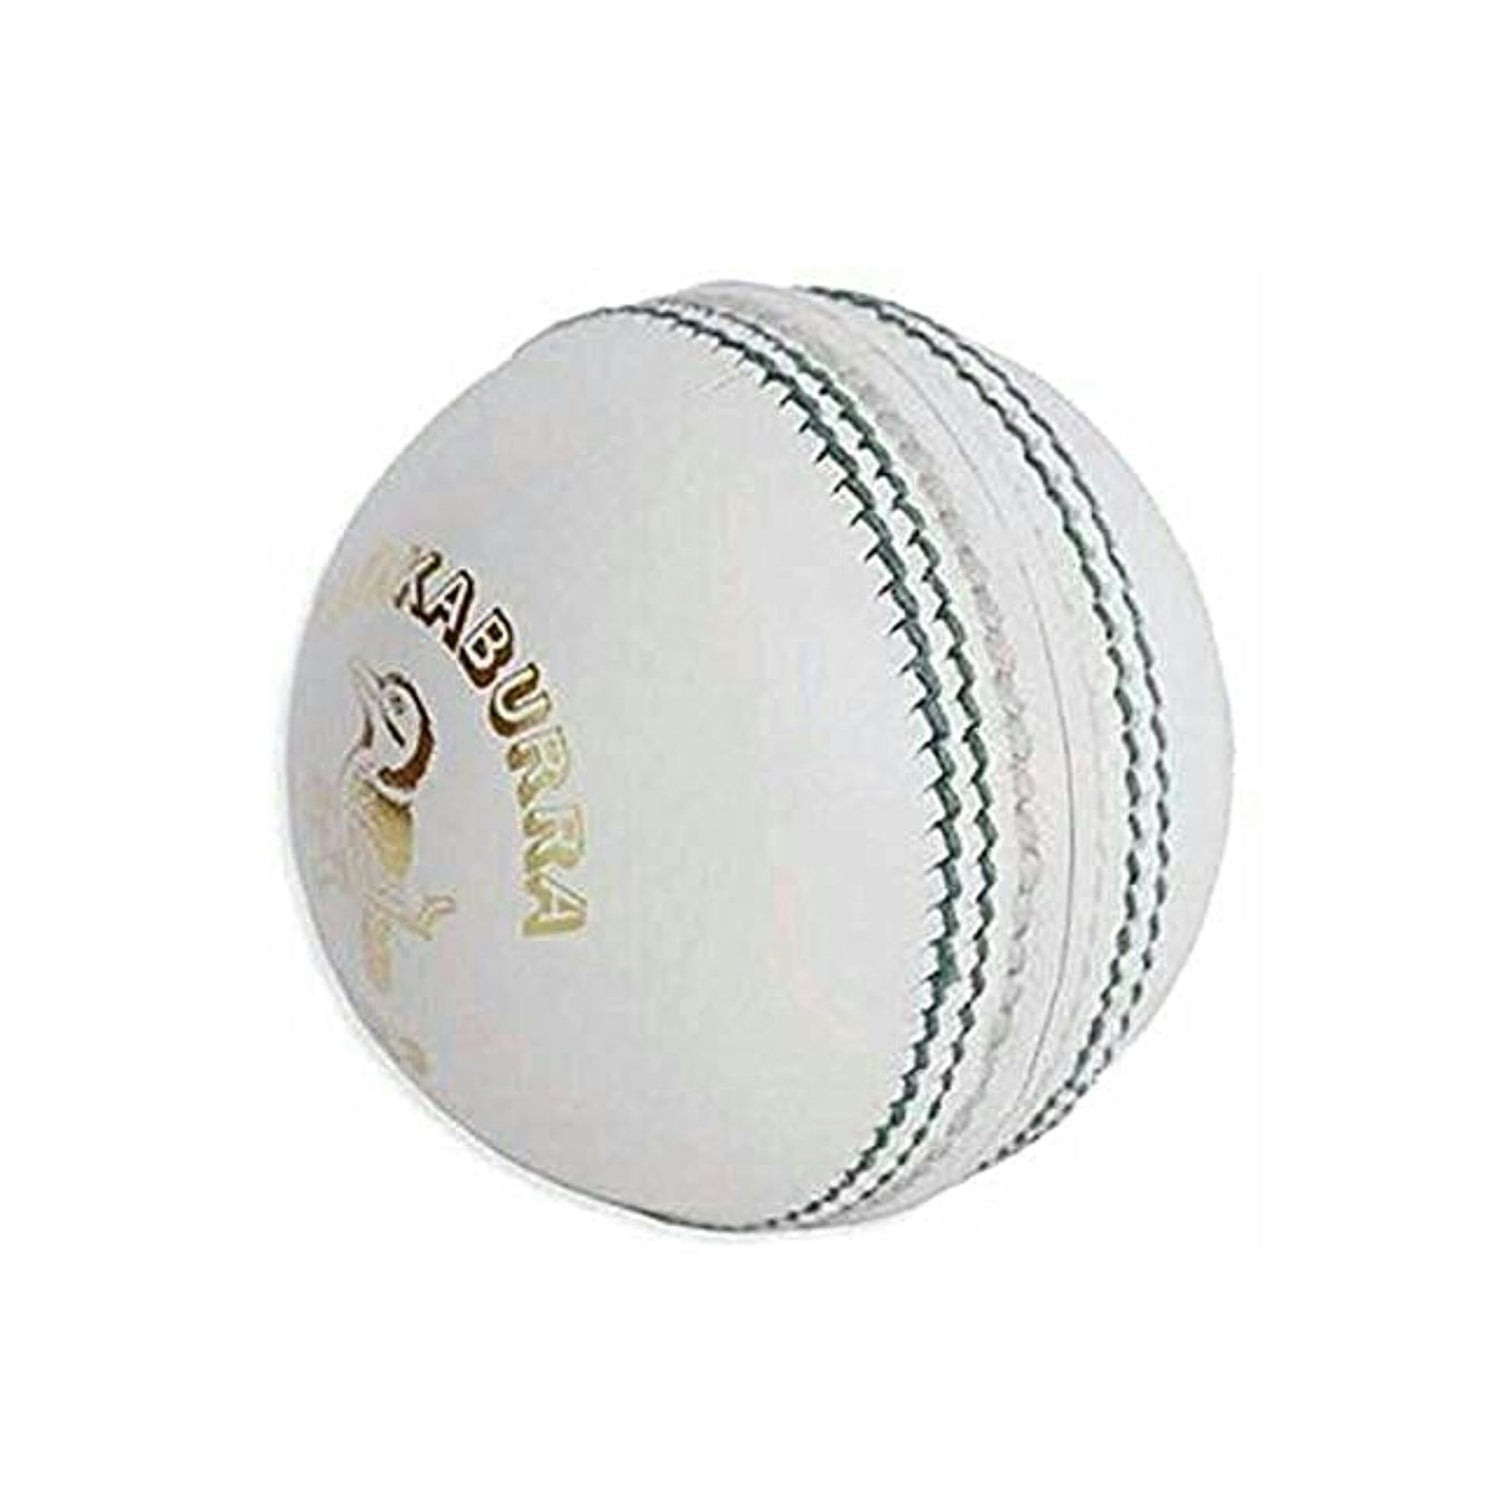 Kookaburra Pace Cricket Ball, White - 1PC - Best Price online Prokicksports.com